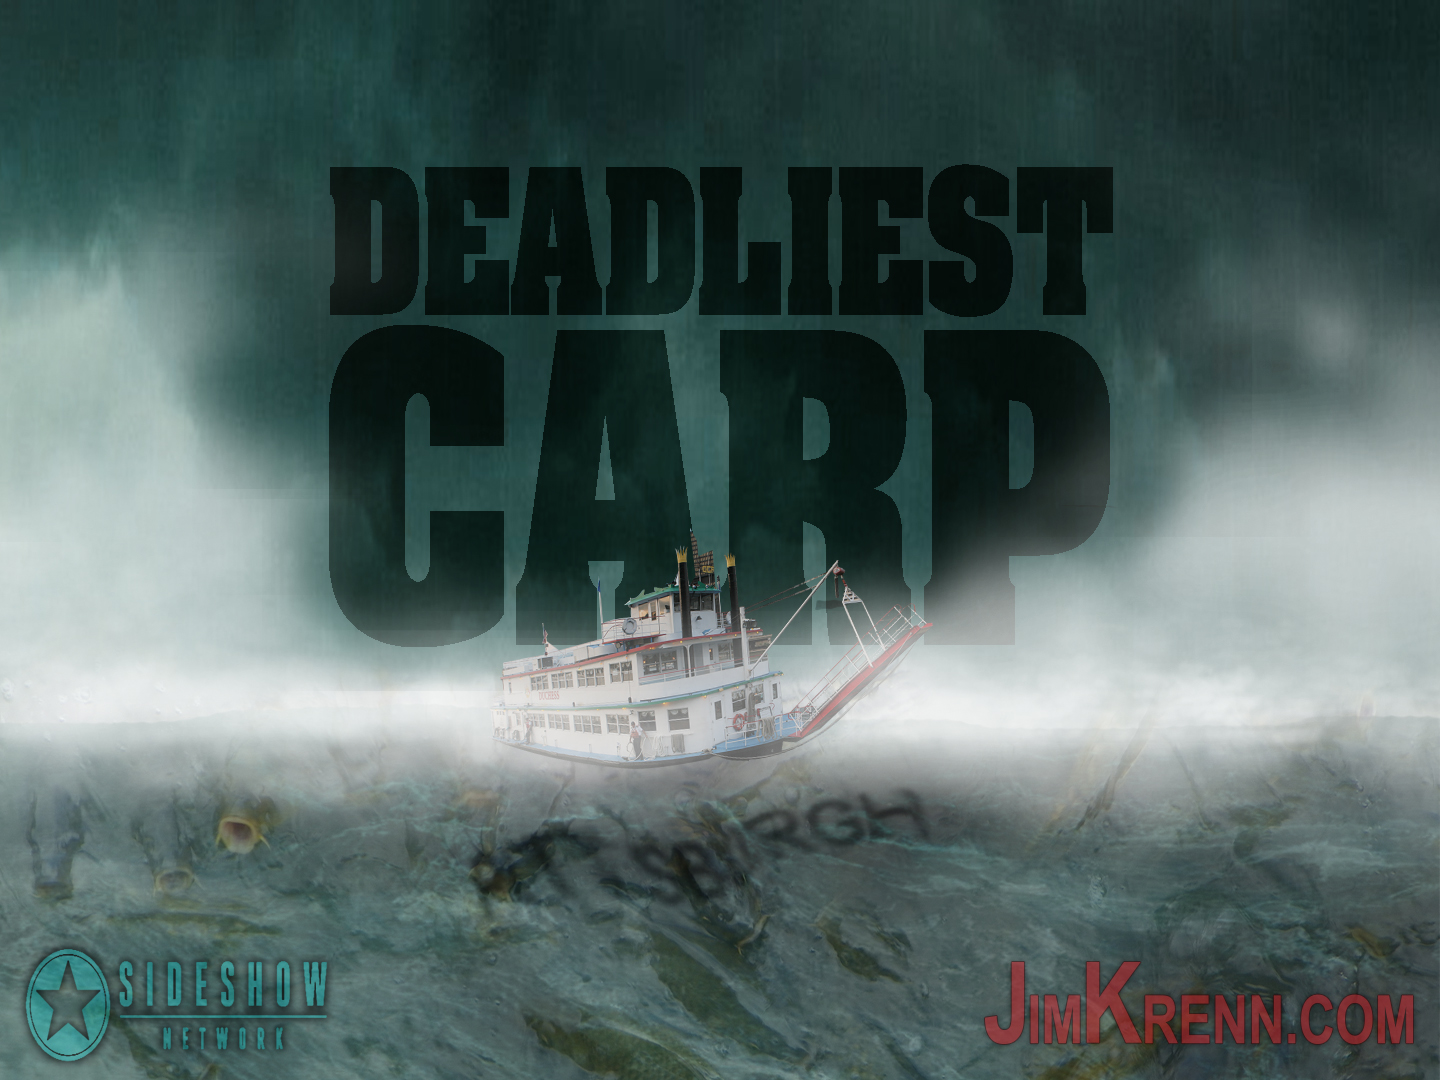 deadliest catch spoof deadliest carp in pittsburgh